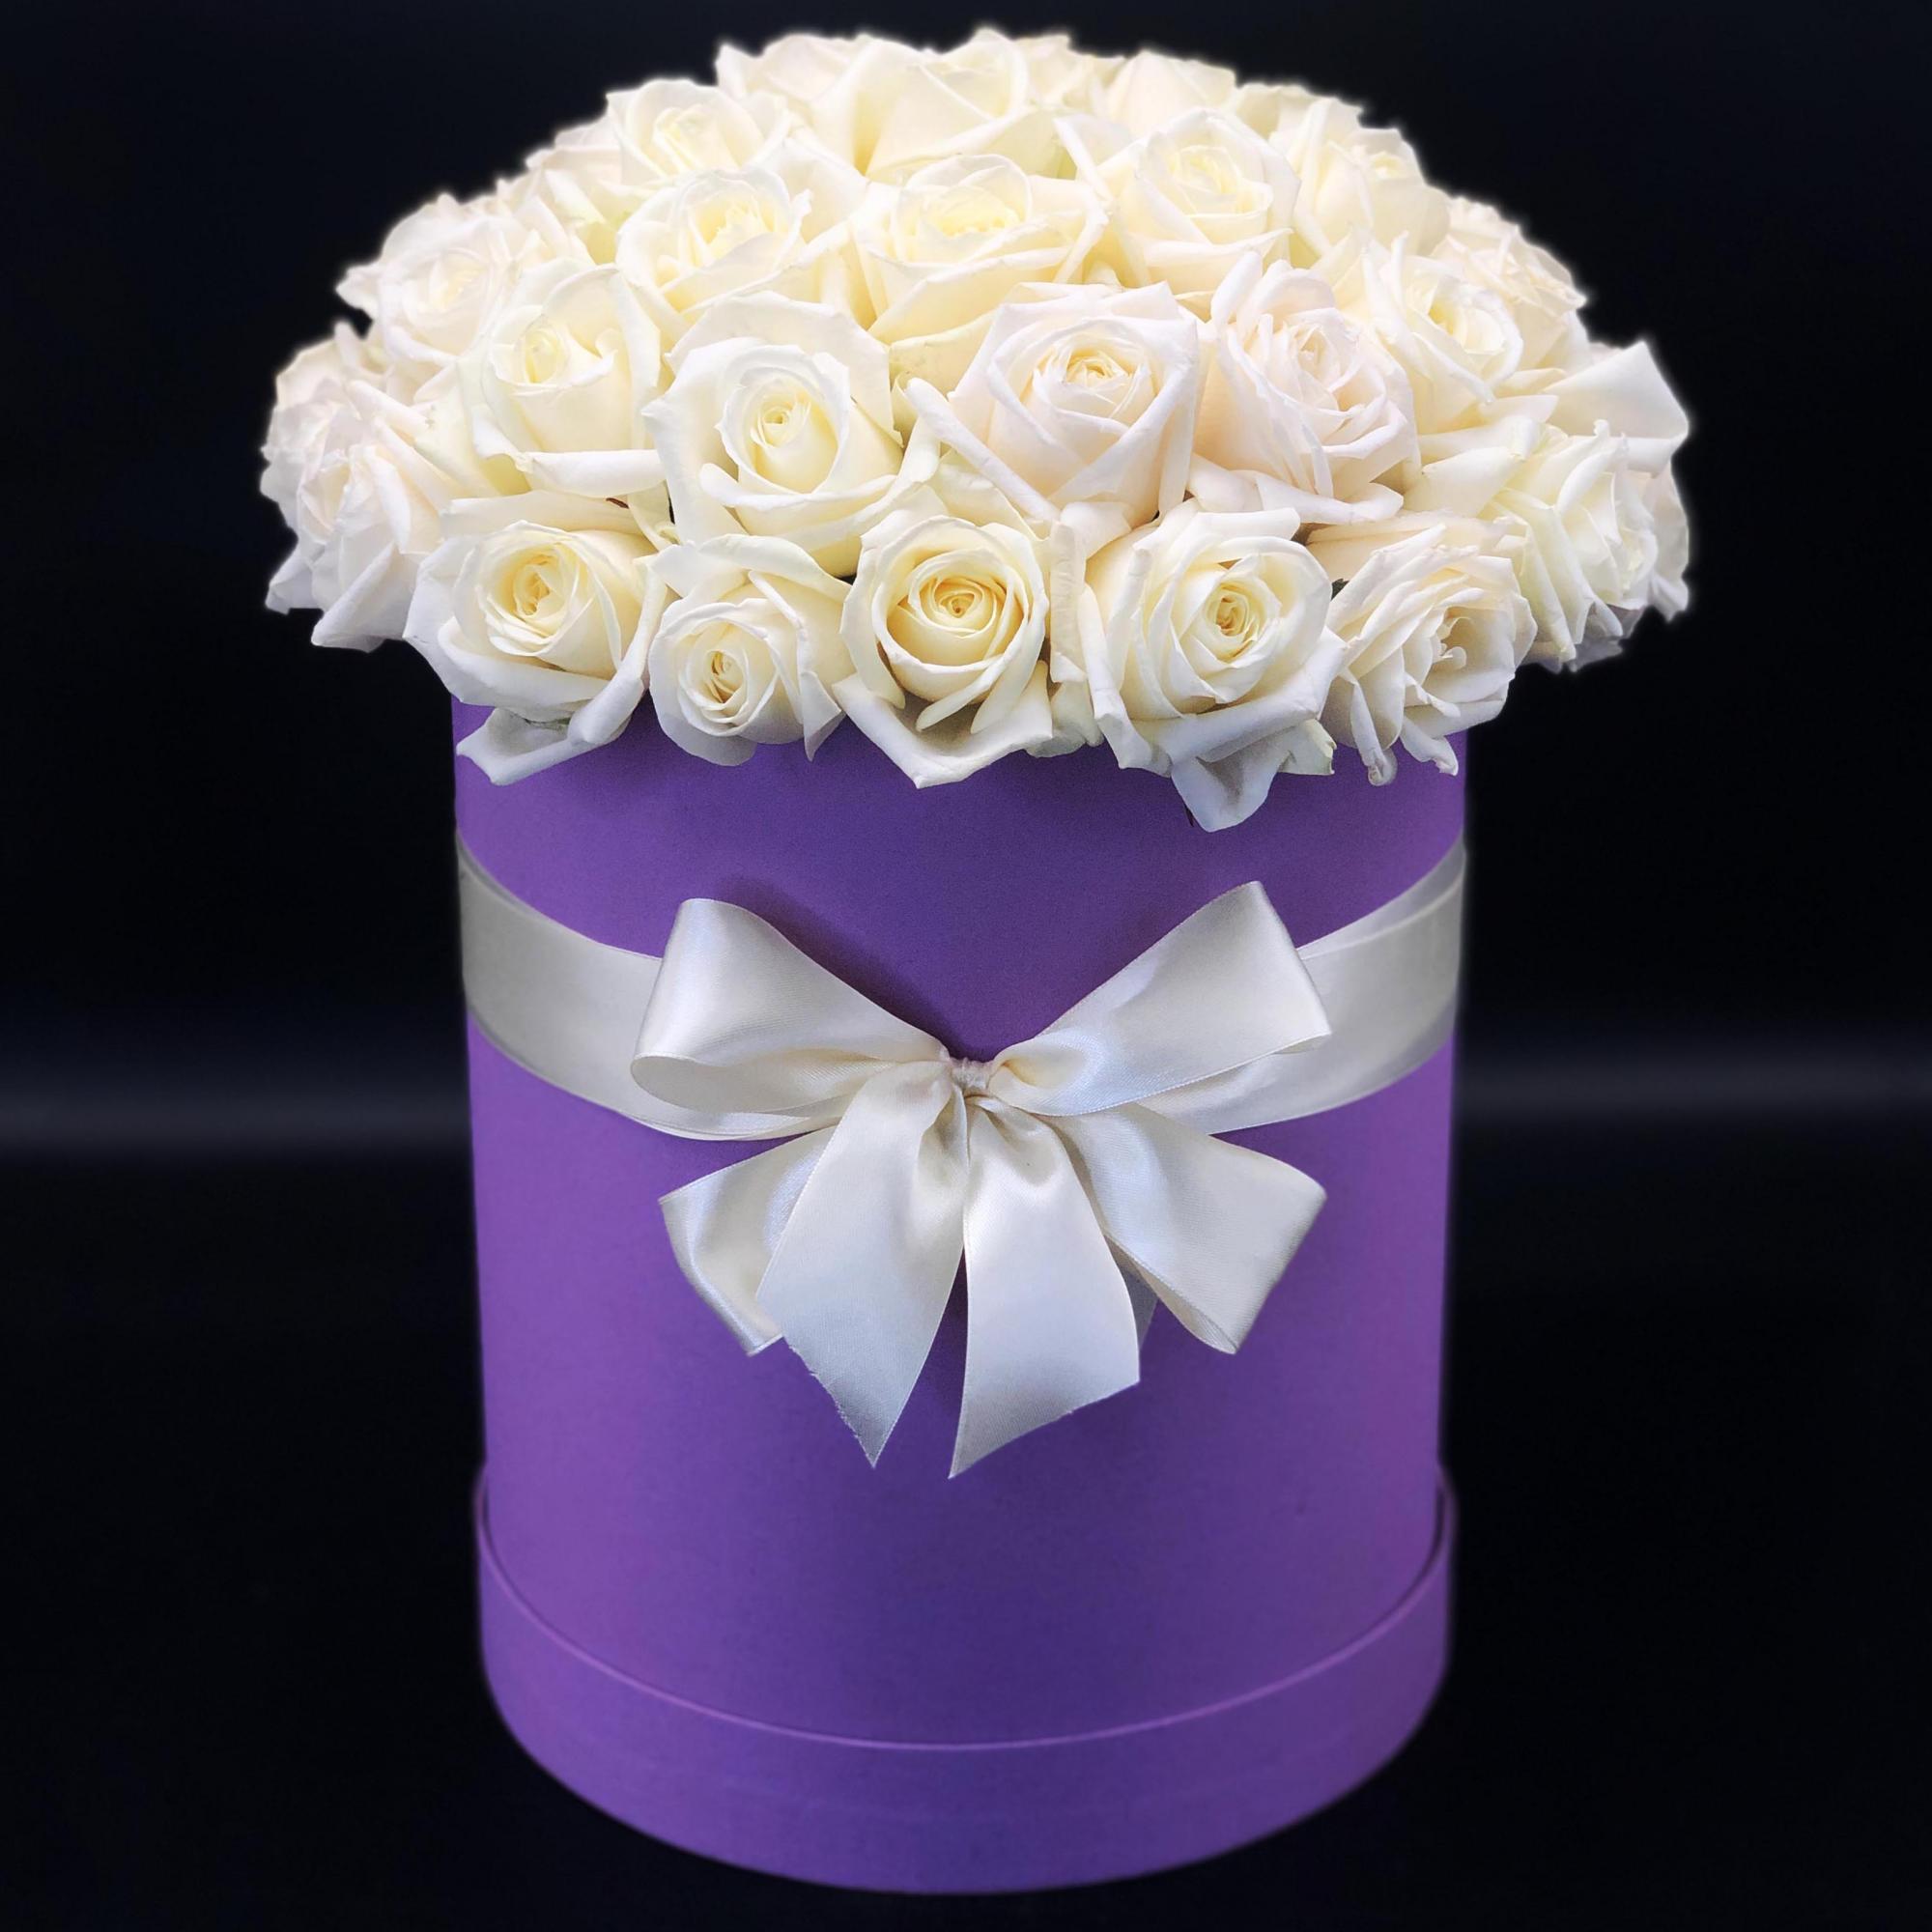 Kemer Florist 29 White Roses in a purple box